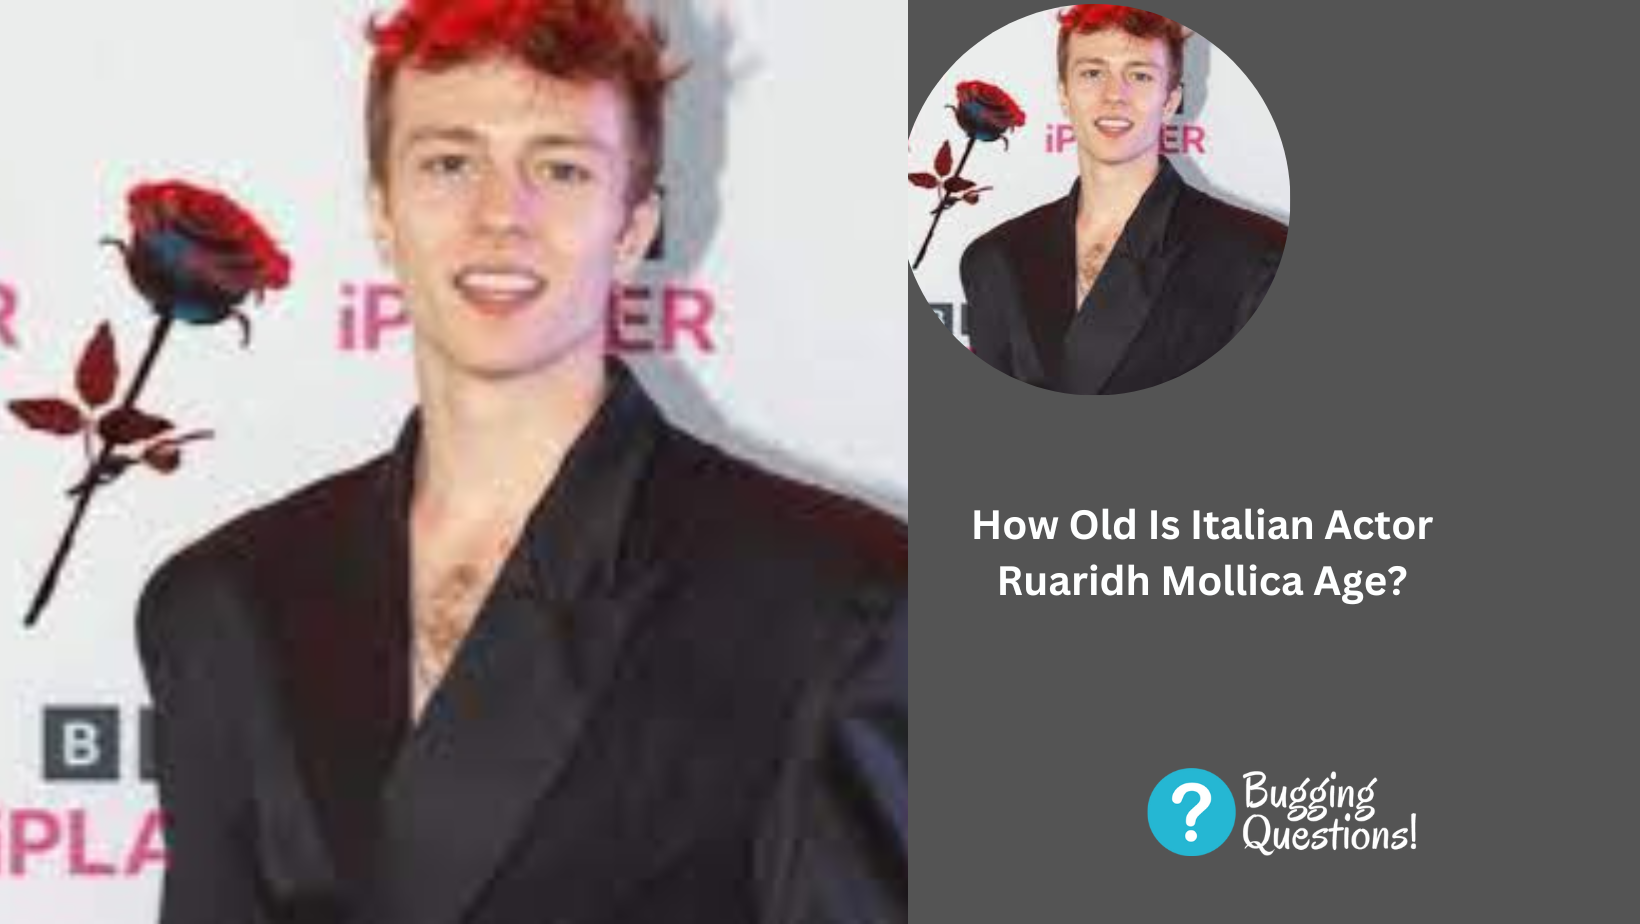 How Old Is Italian Actor Ruaridh Mollica Age?